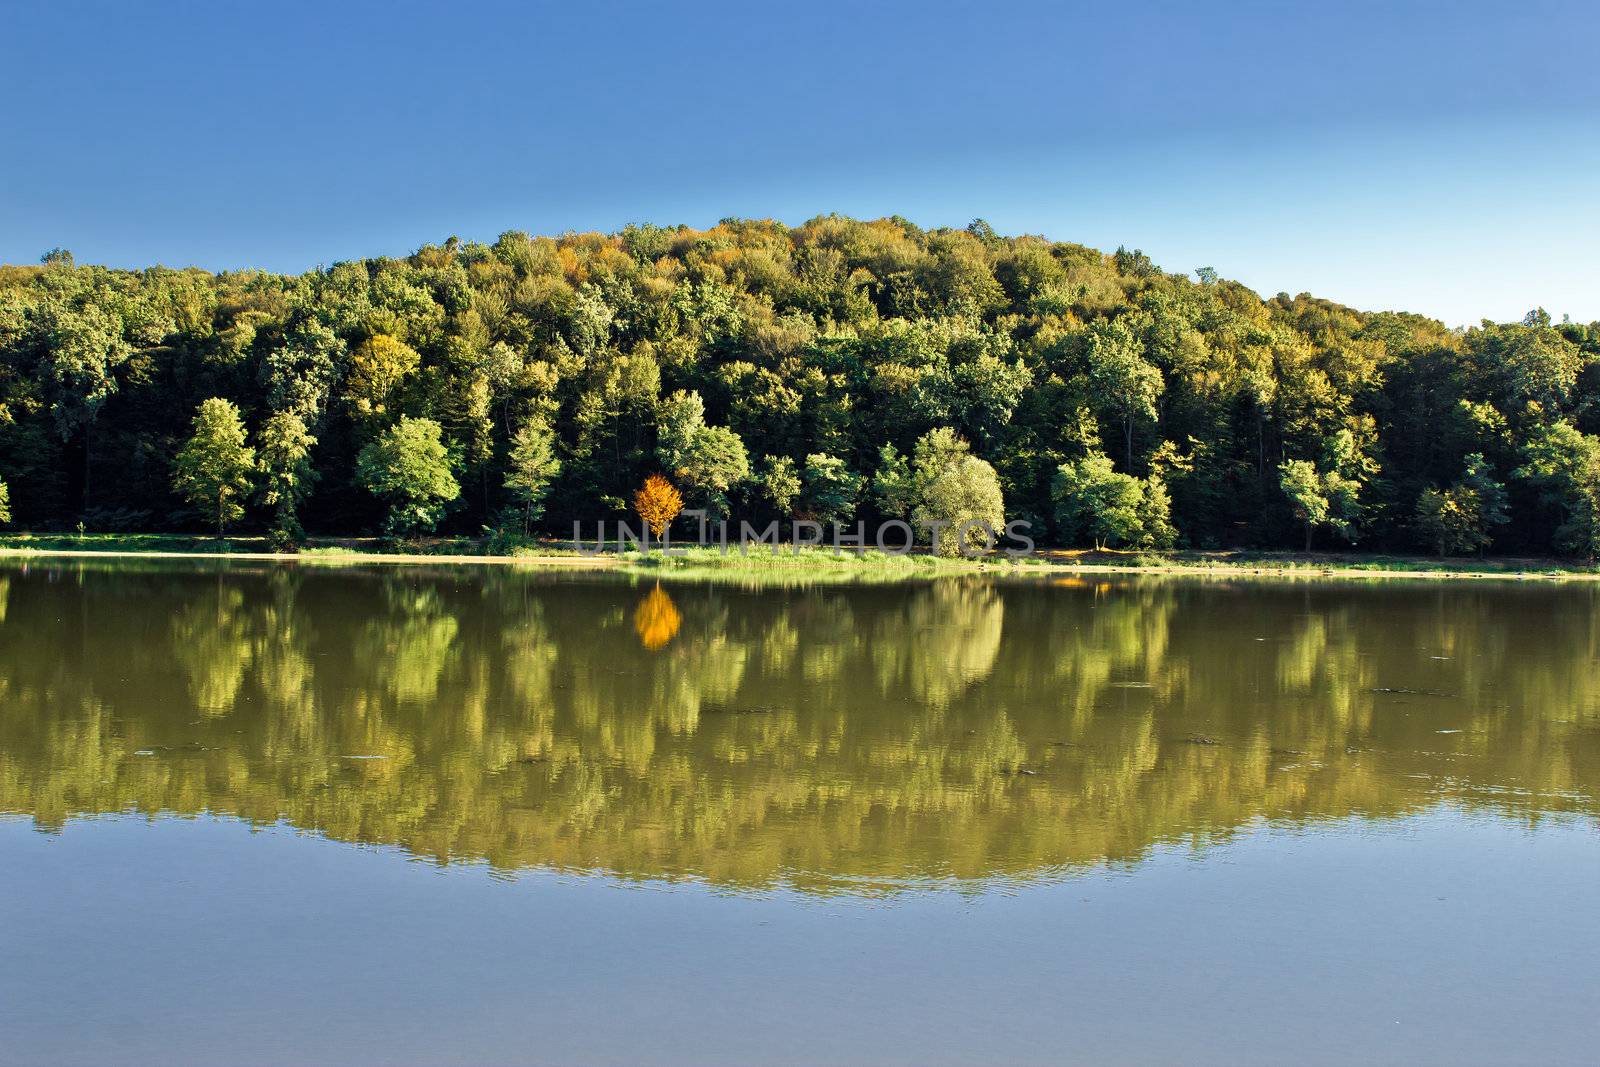 Idyllic autumn reflections on lake surface, Ravenska kapela lake, Croatia